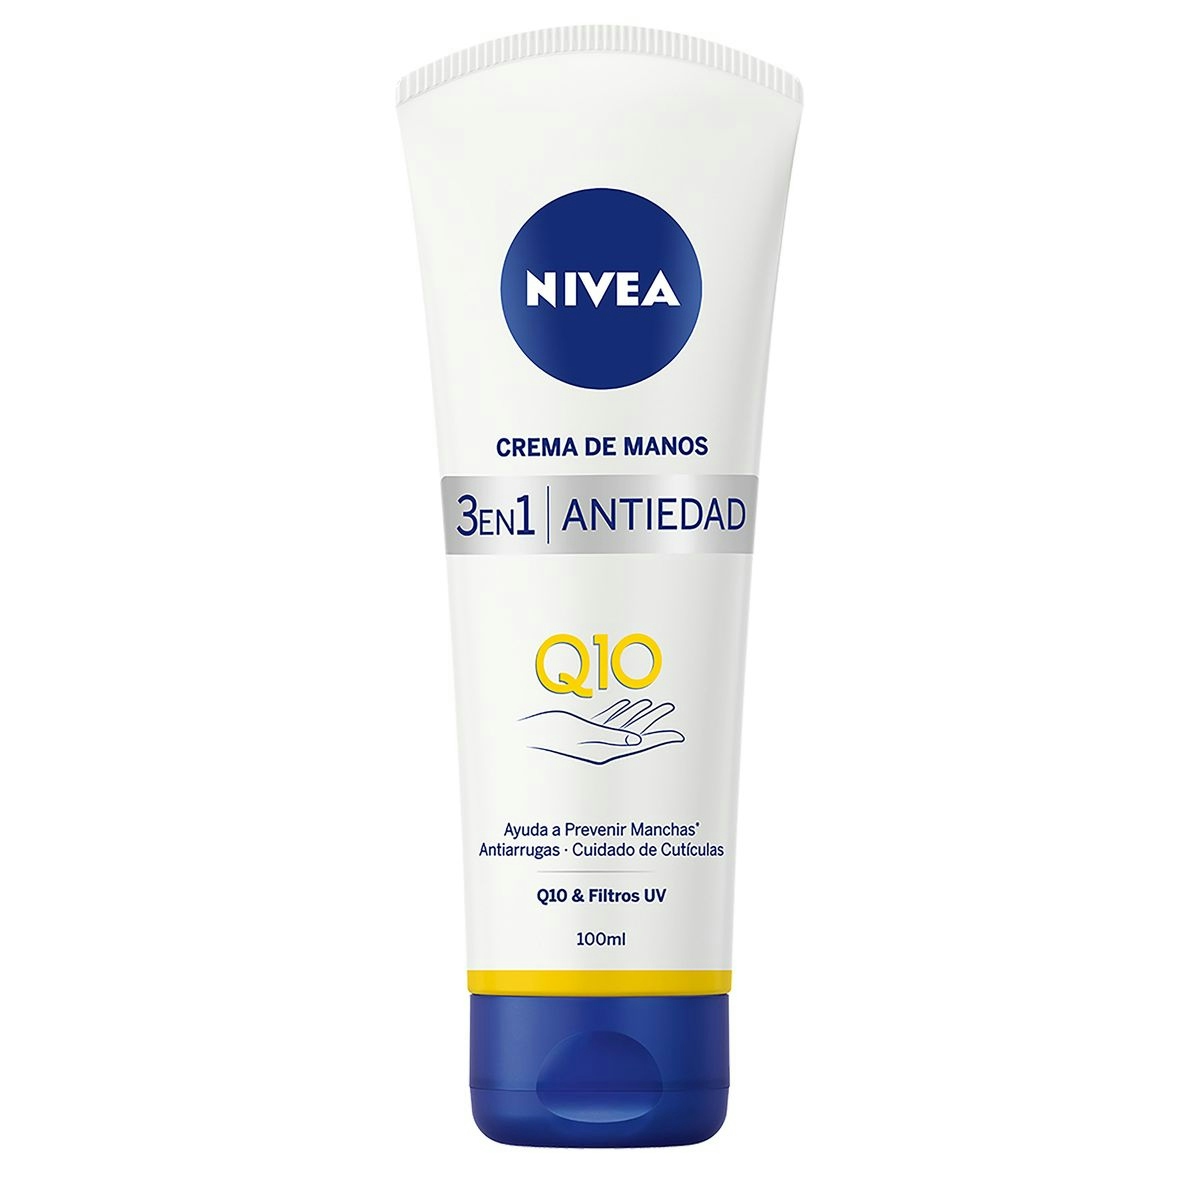 Crema para manos secas NIVEA Q10 Plus antiedad tubo 100 ml